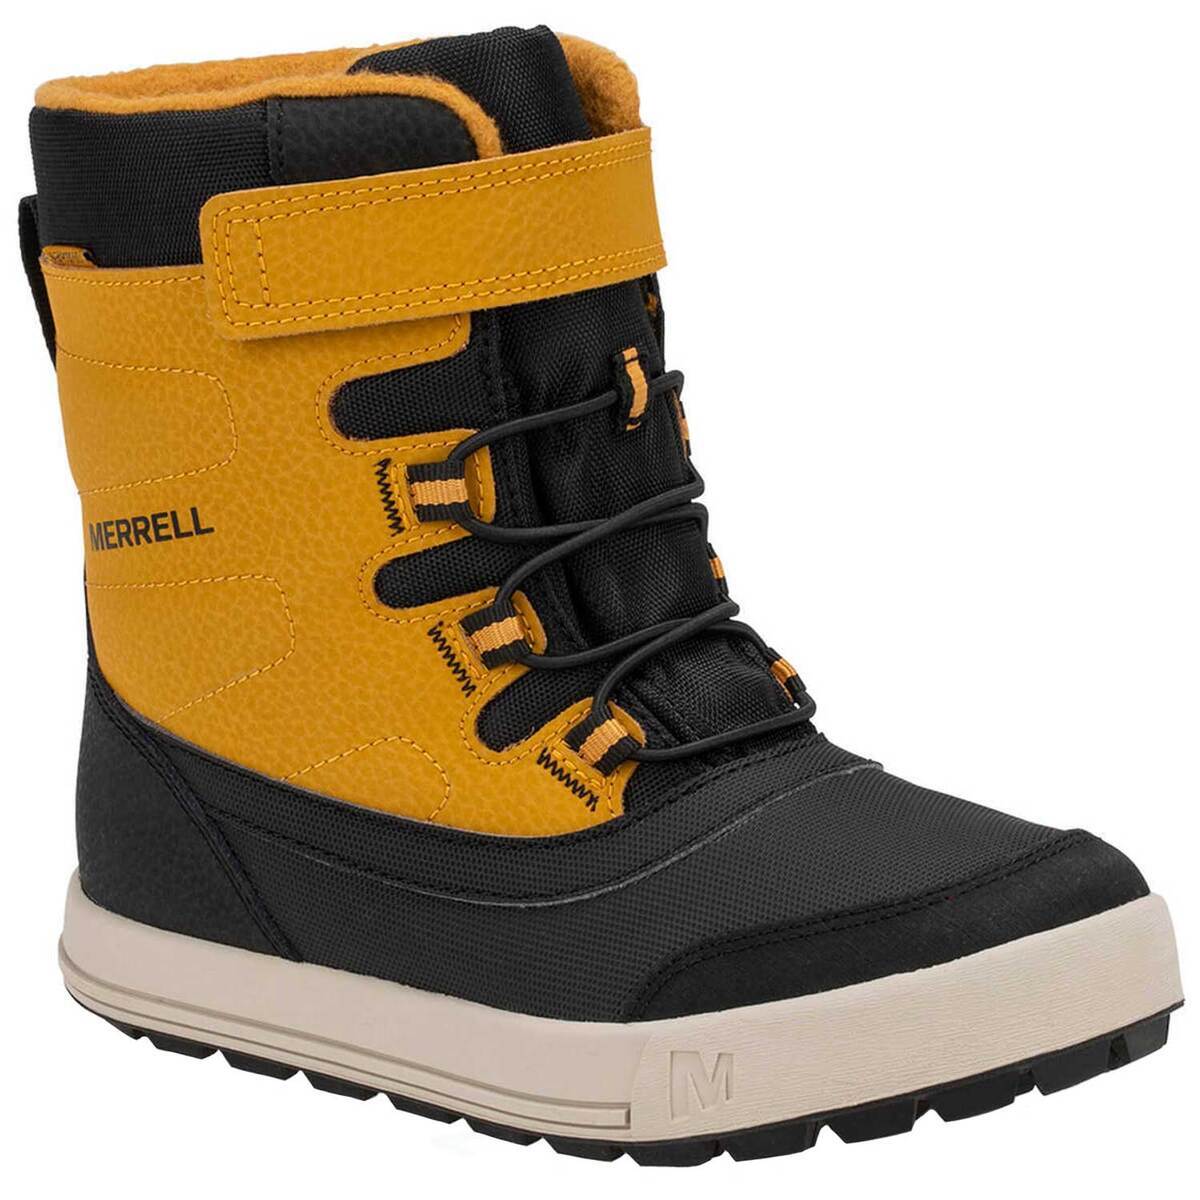 Merrell Youth Snow Storm Waterproof Winter Boots | Sportsman's